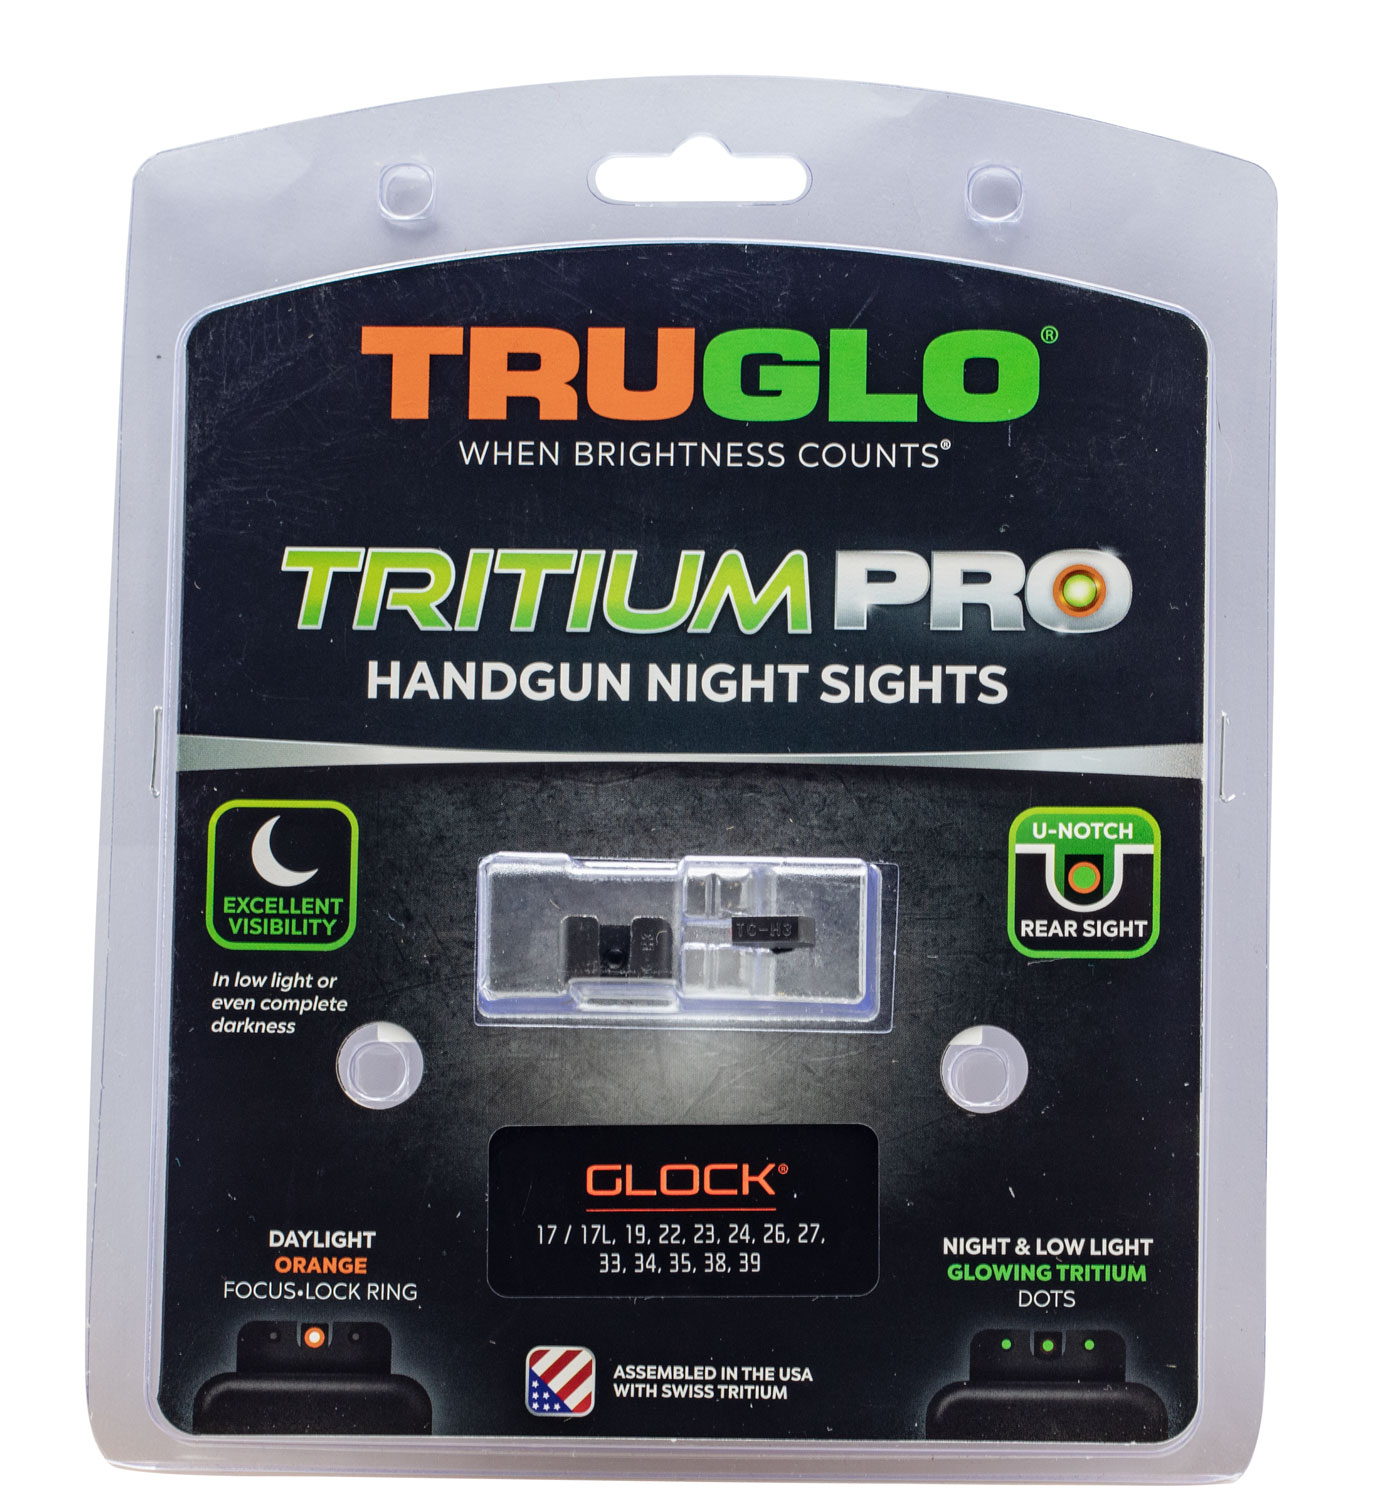 TruGlo Tritium Pro Handgun Sights